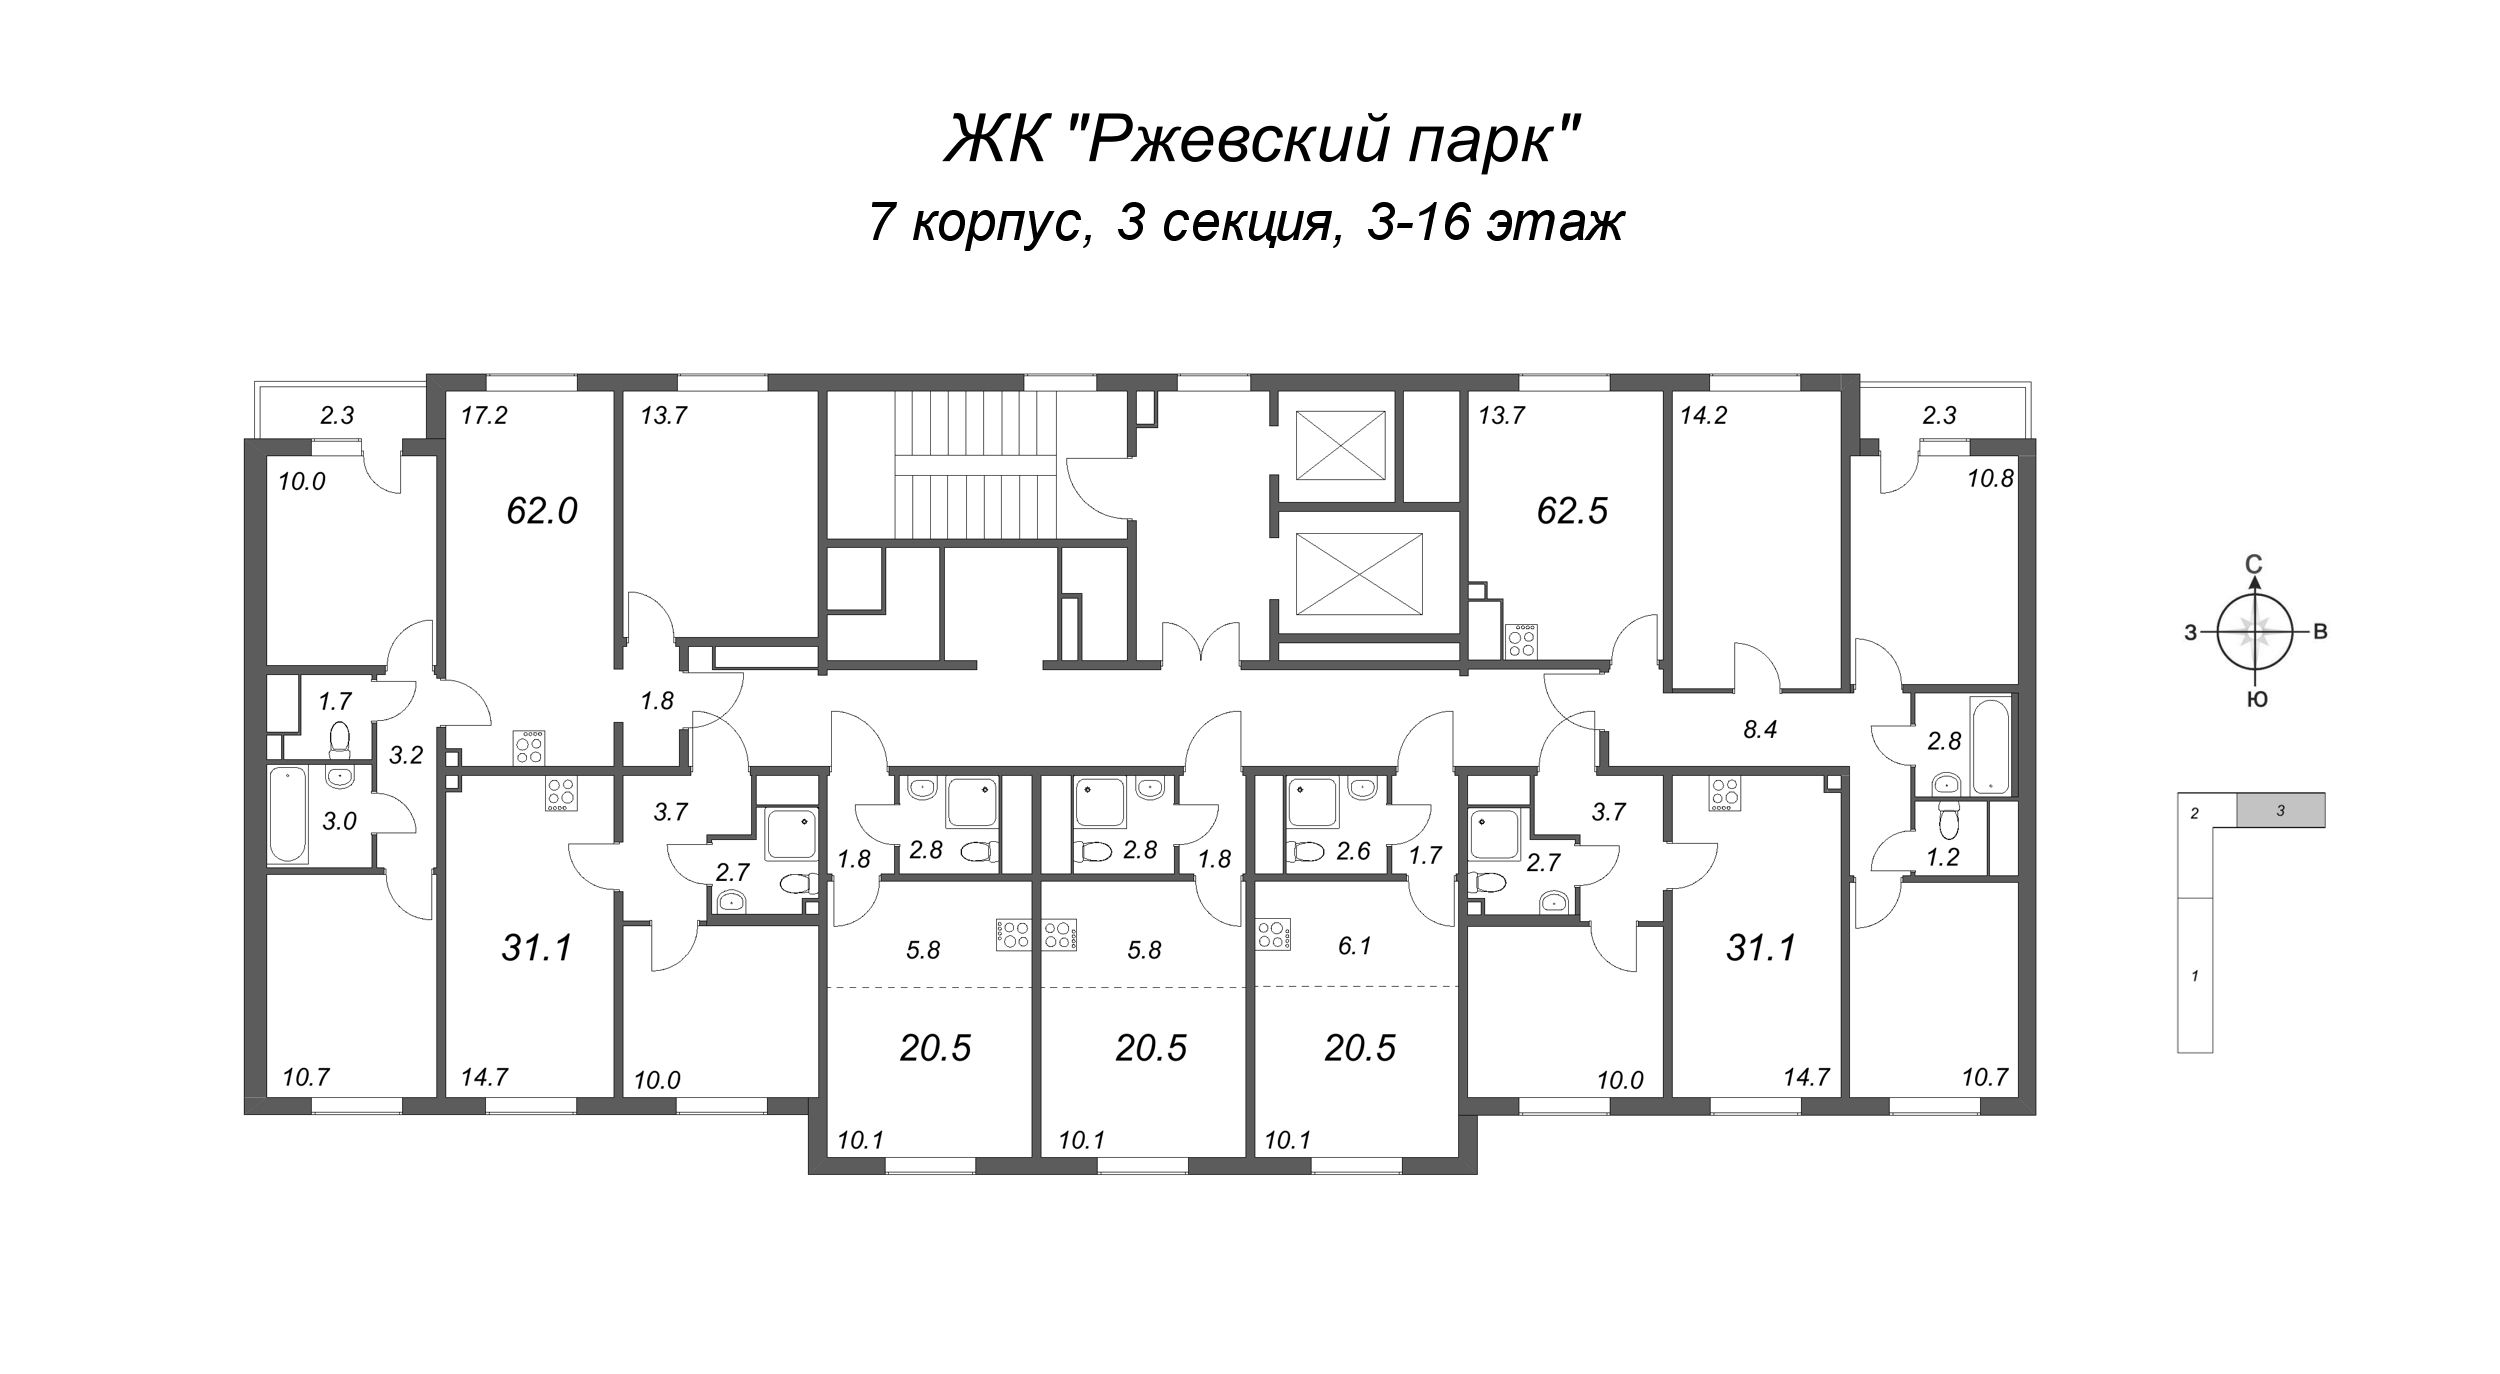 4-комнатная (Евро) квартира, 62 м² - планировка этажа